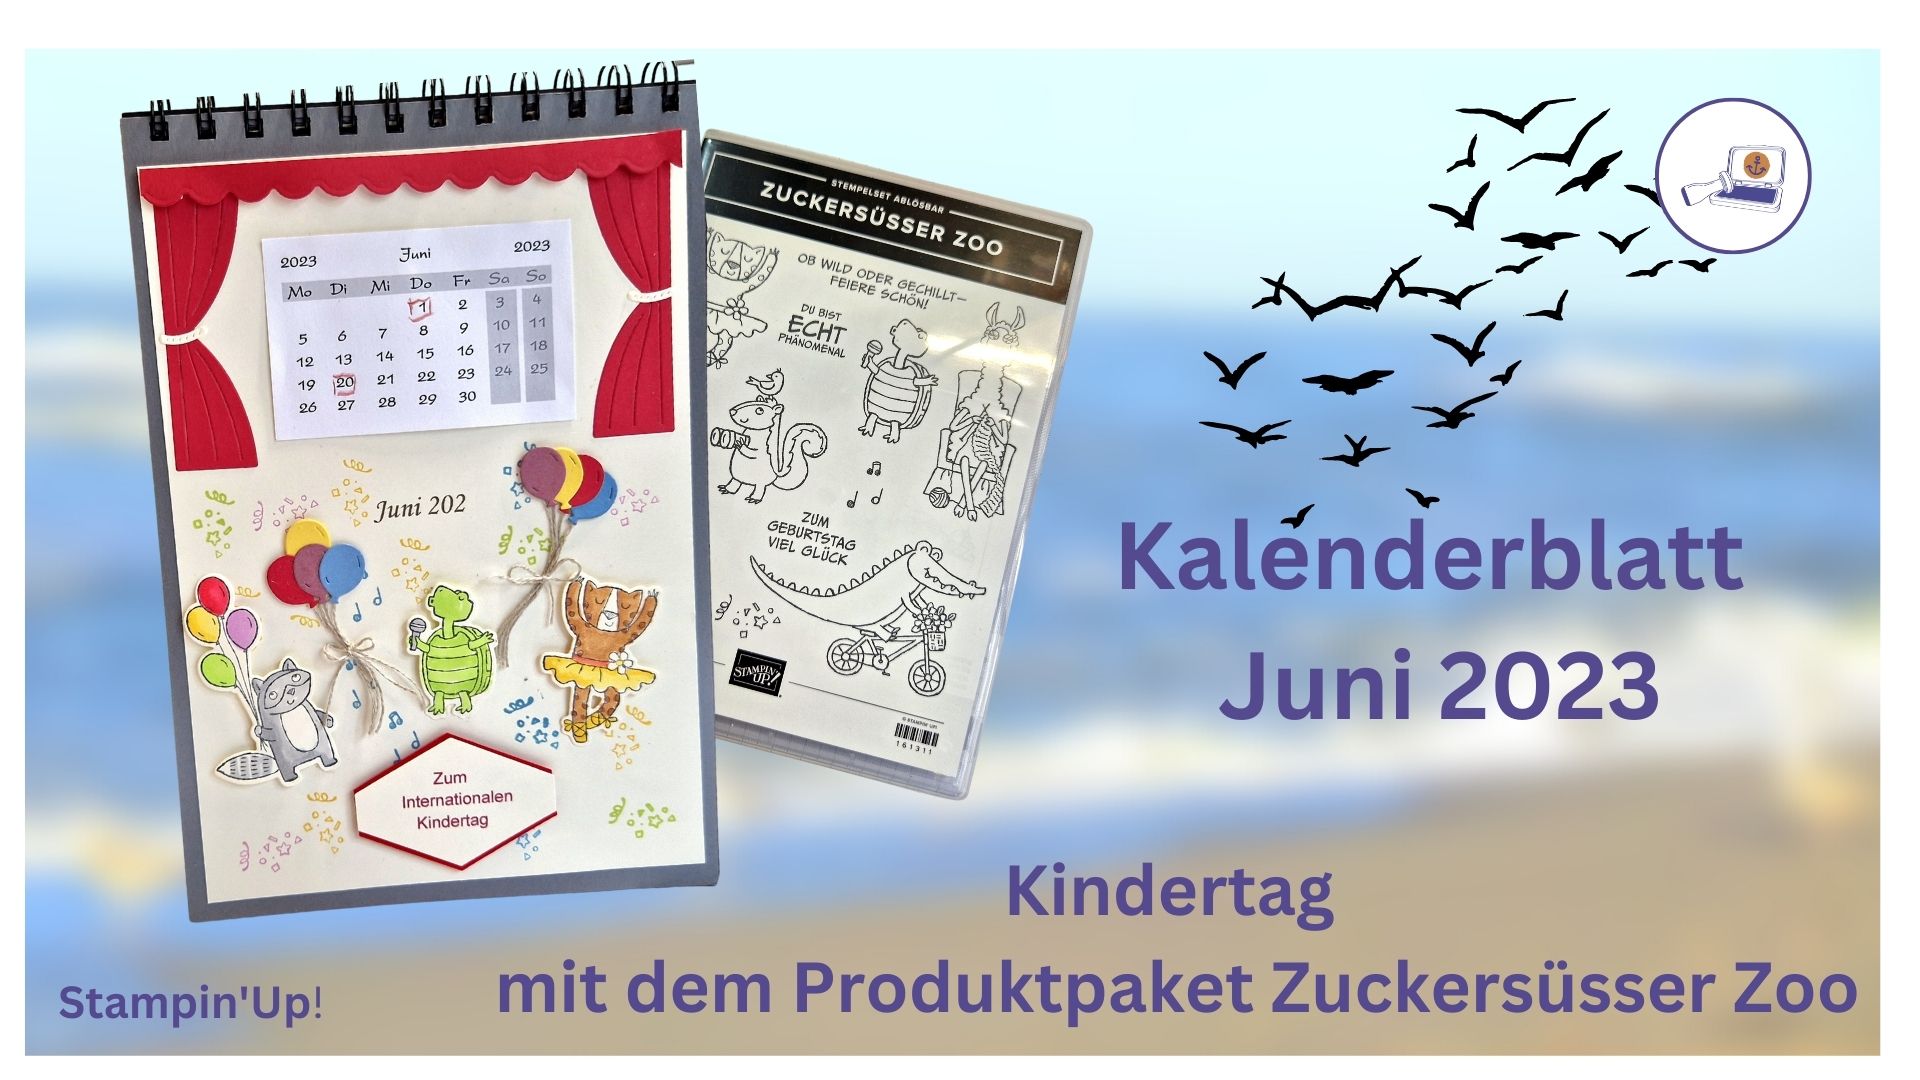 You are currently viewing Anleitung – Kalenderblatt Juni 2023 – Thema: Kindertag – PP: Zuckersüsser Zoo – Stampin’Up!